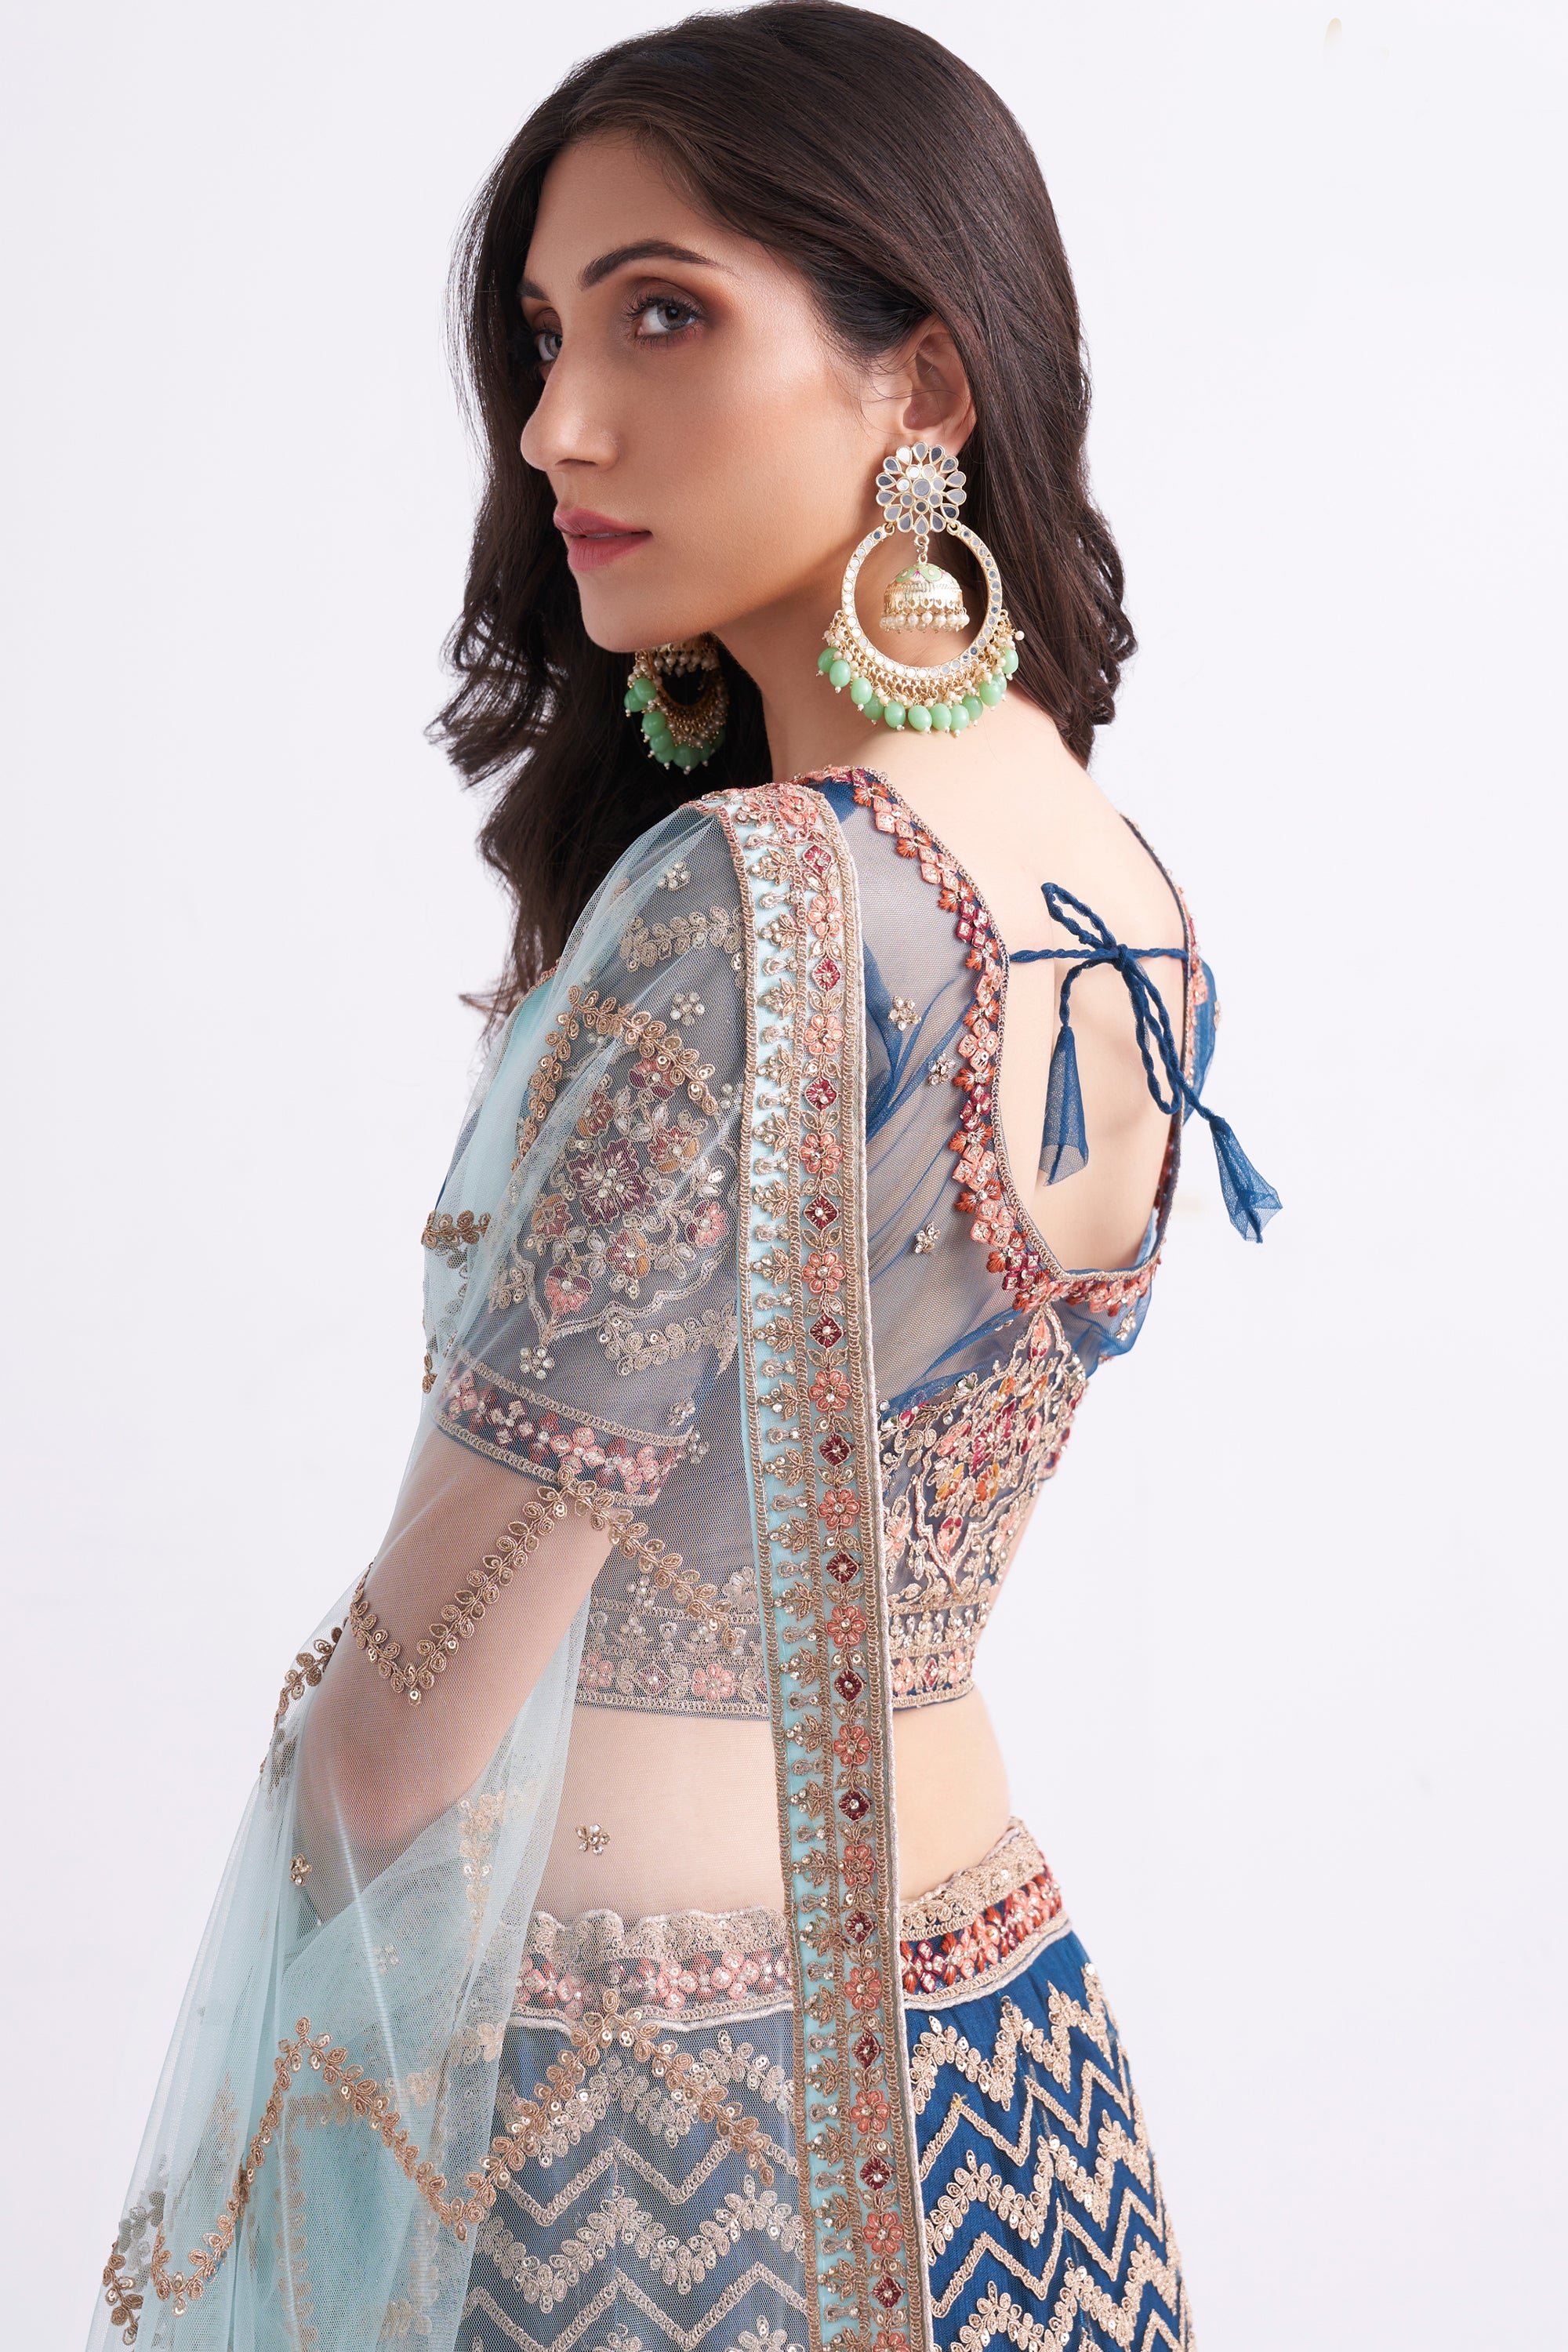 Women's Bridal Heritage Persian Blue Heavy Embroidered Net Designer Lehenga - CHITRAS